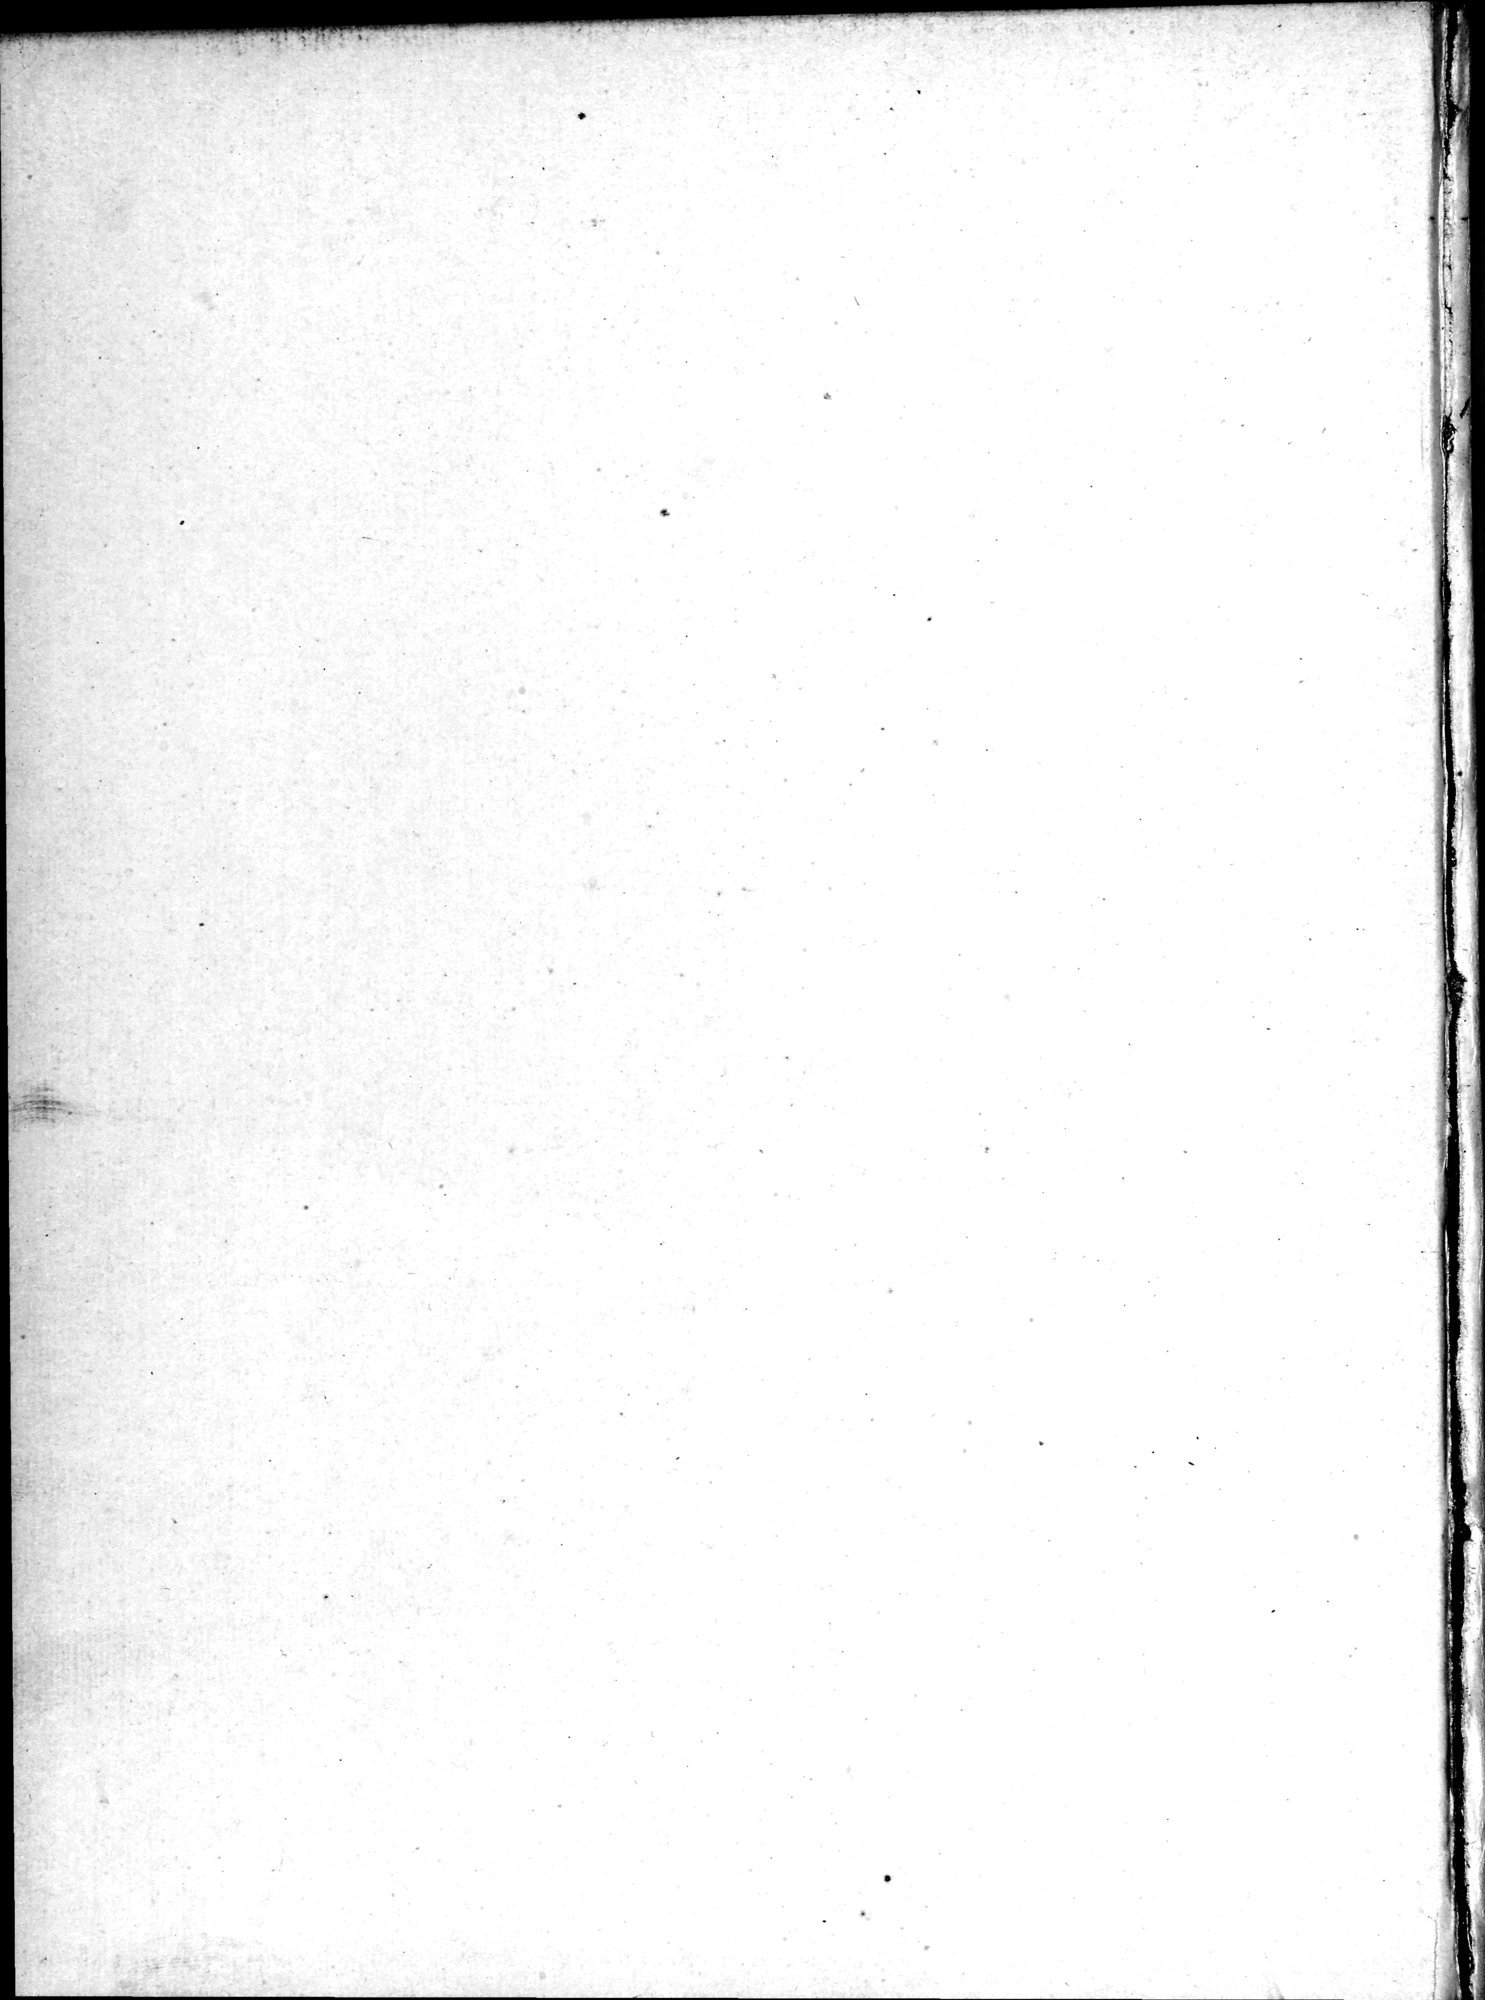 Mongoliia i Kam : vol.1 / Page 4 (Grayscale High Resolution Image)